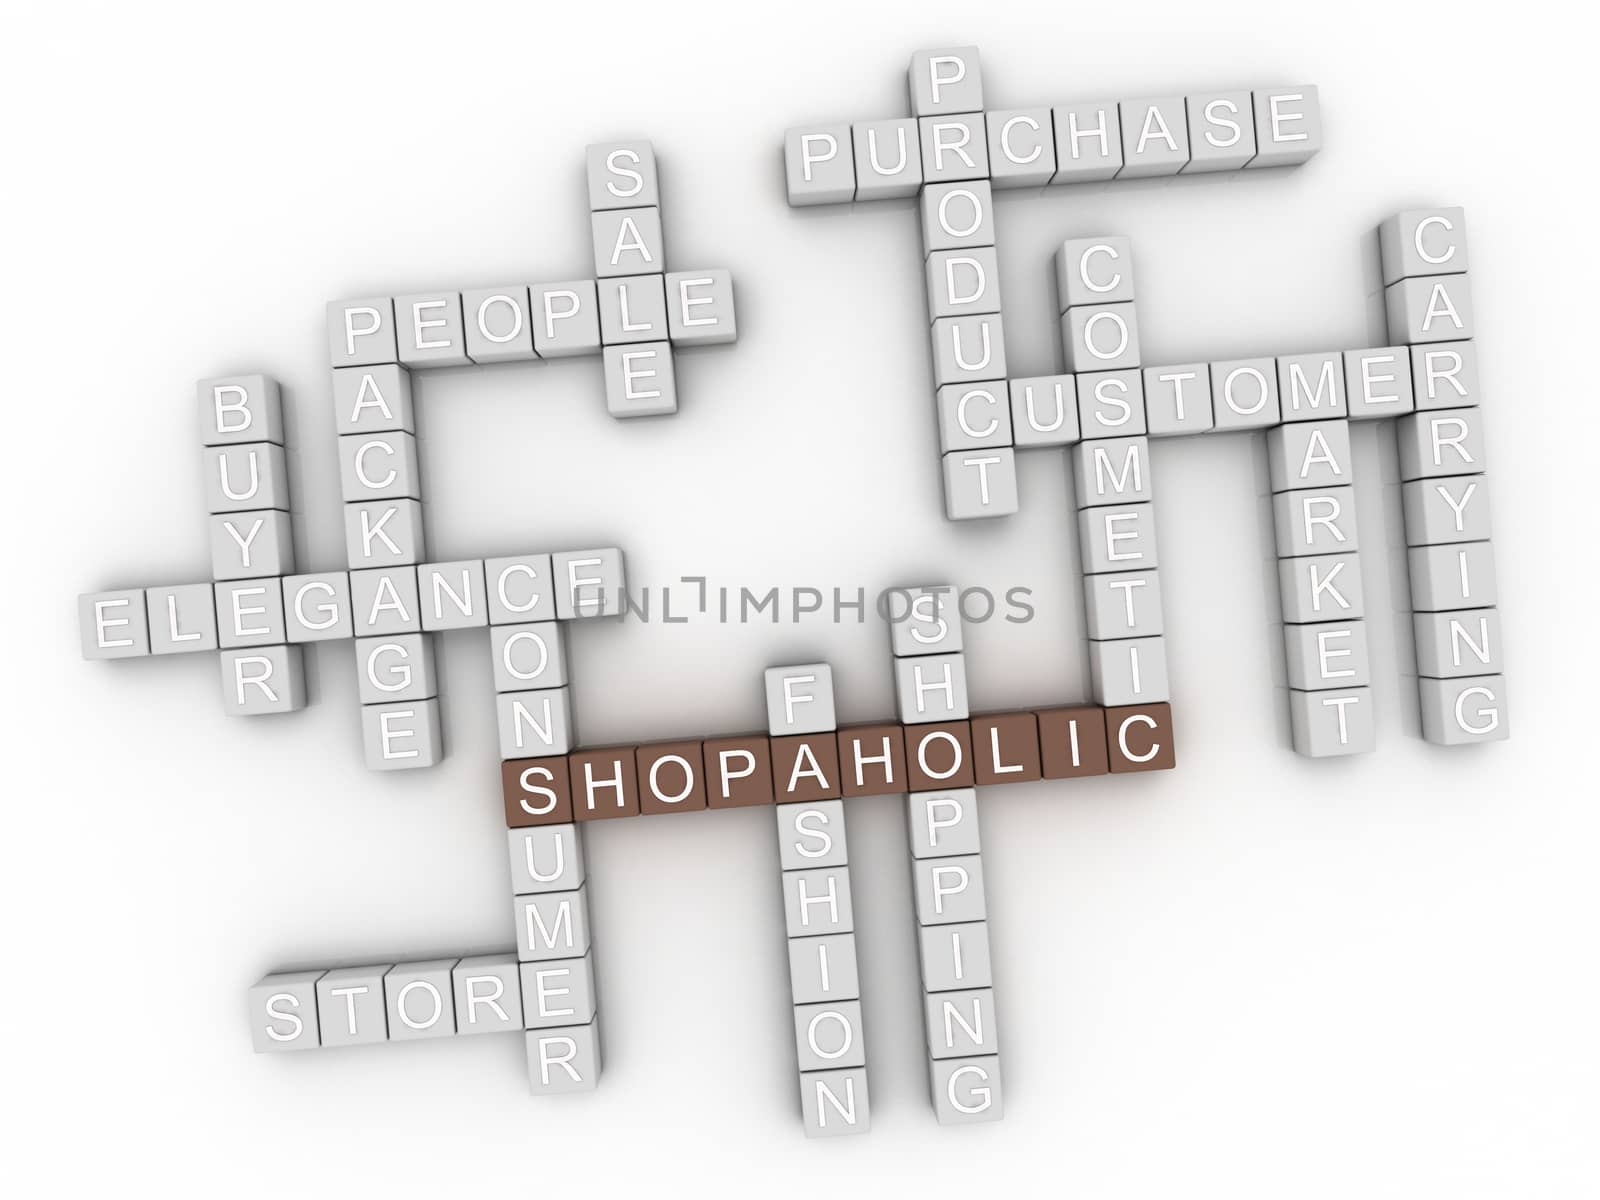 3d image Shopaholic word cloud concept by dacasdo